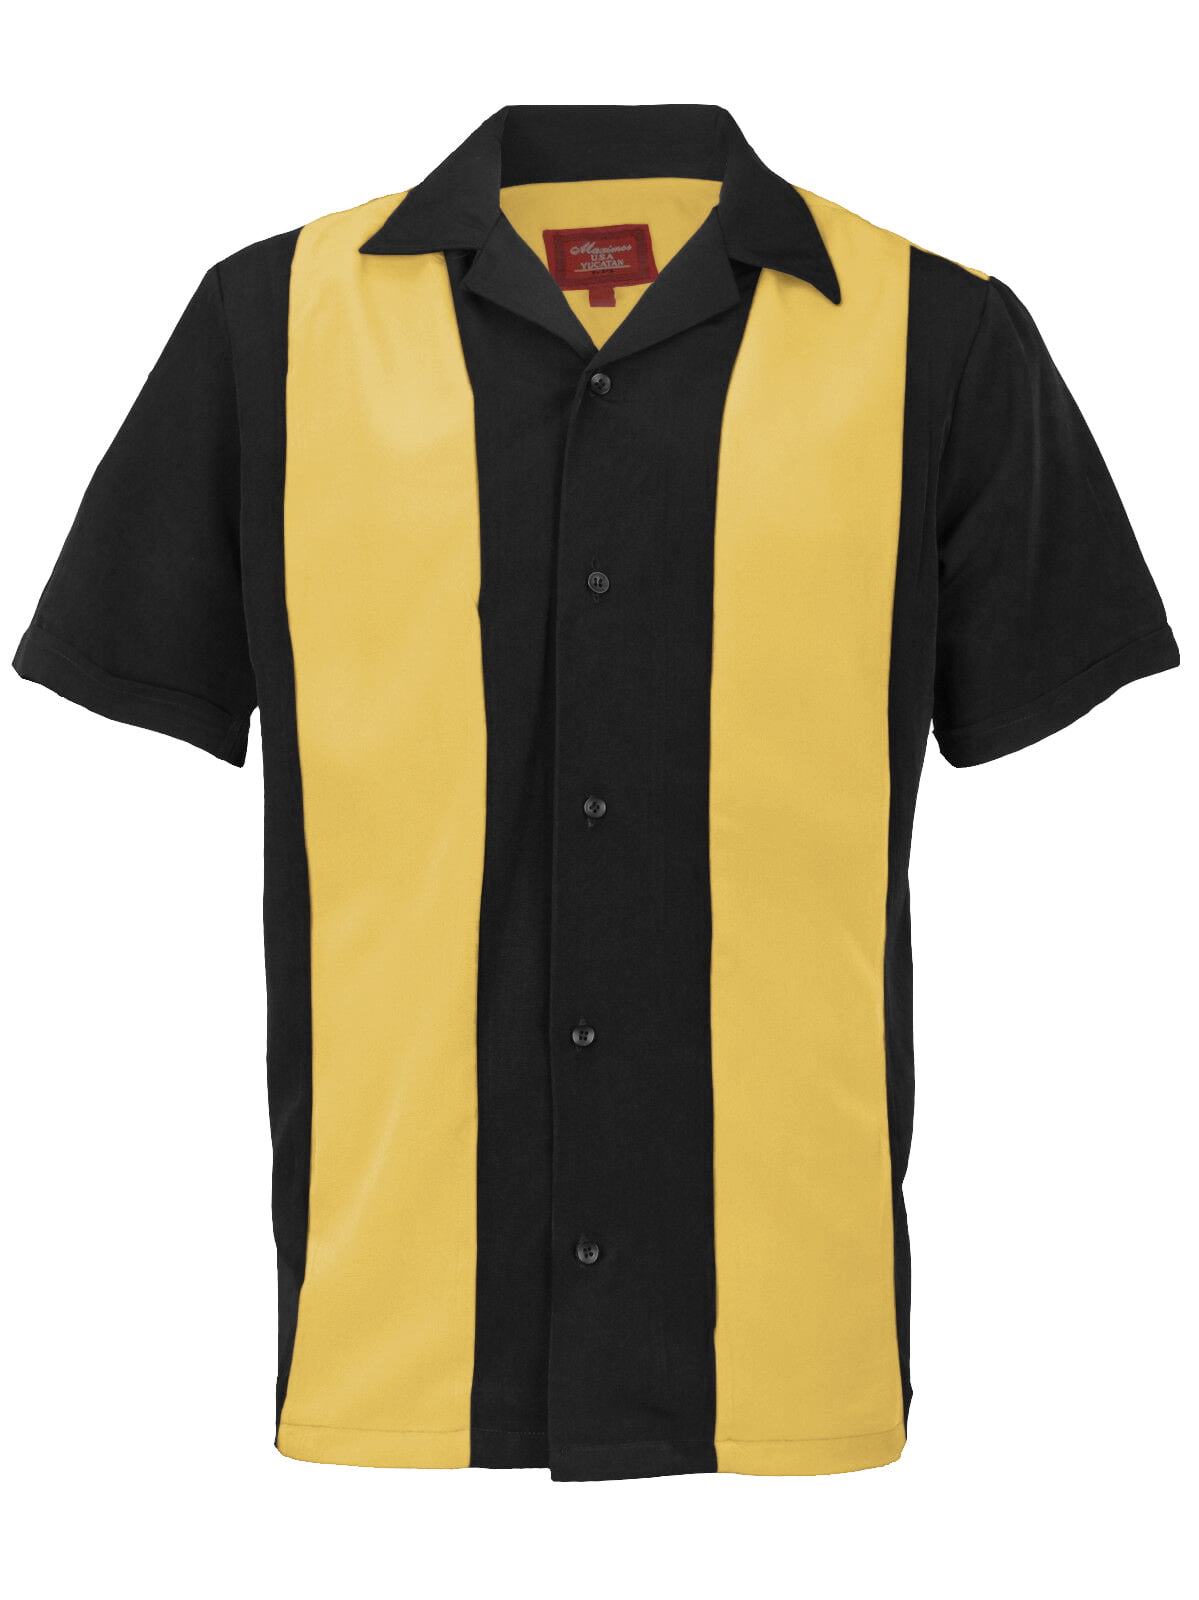 Maximos - Men's Two Tone Bowling Casual Dress Shirt (Yellow/Black, XL